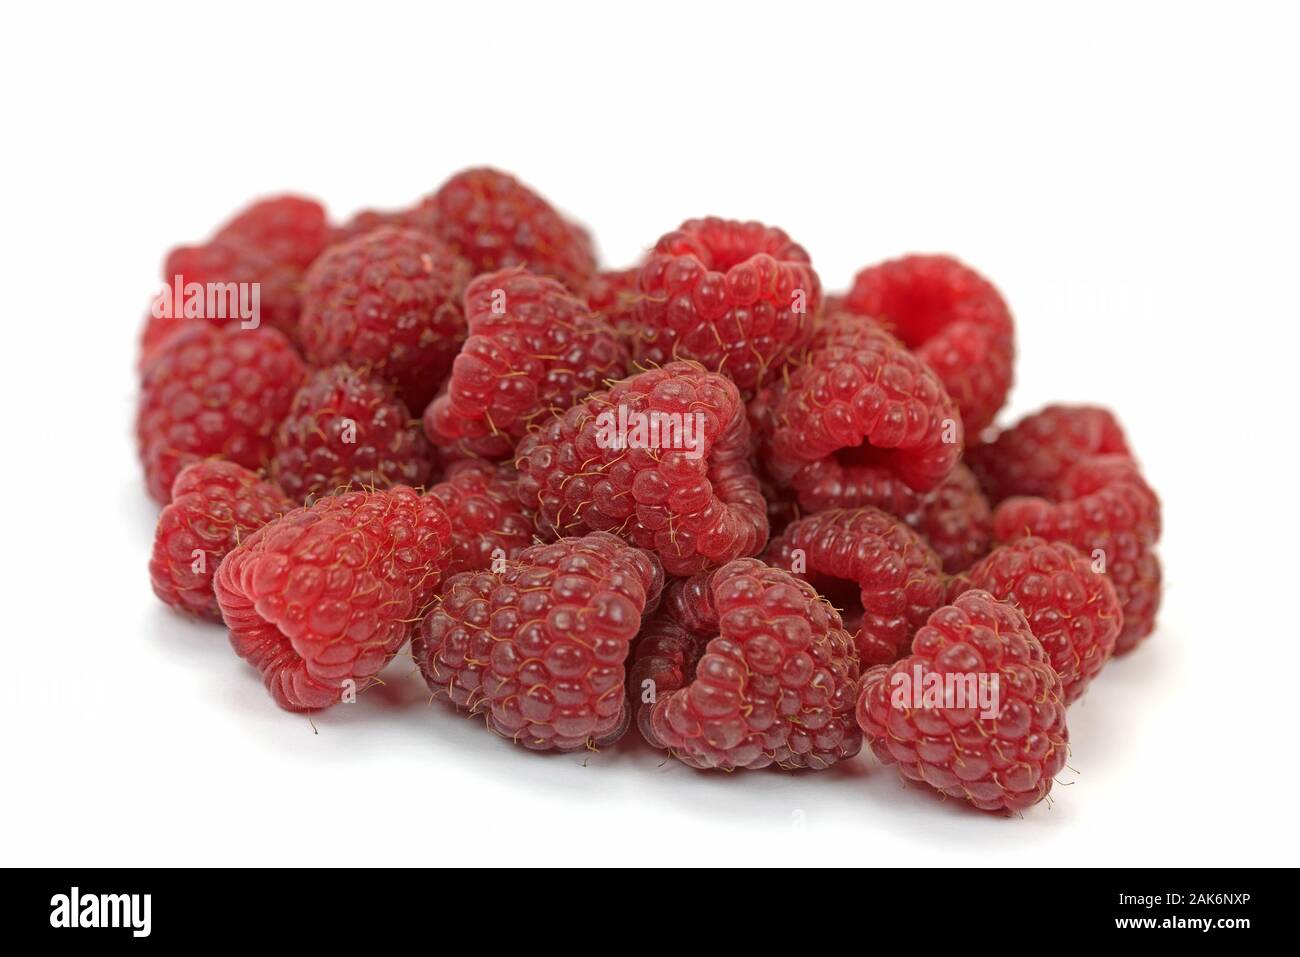 Raspberries against a white background Stock Photo